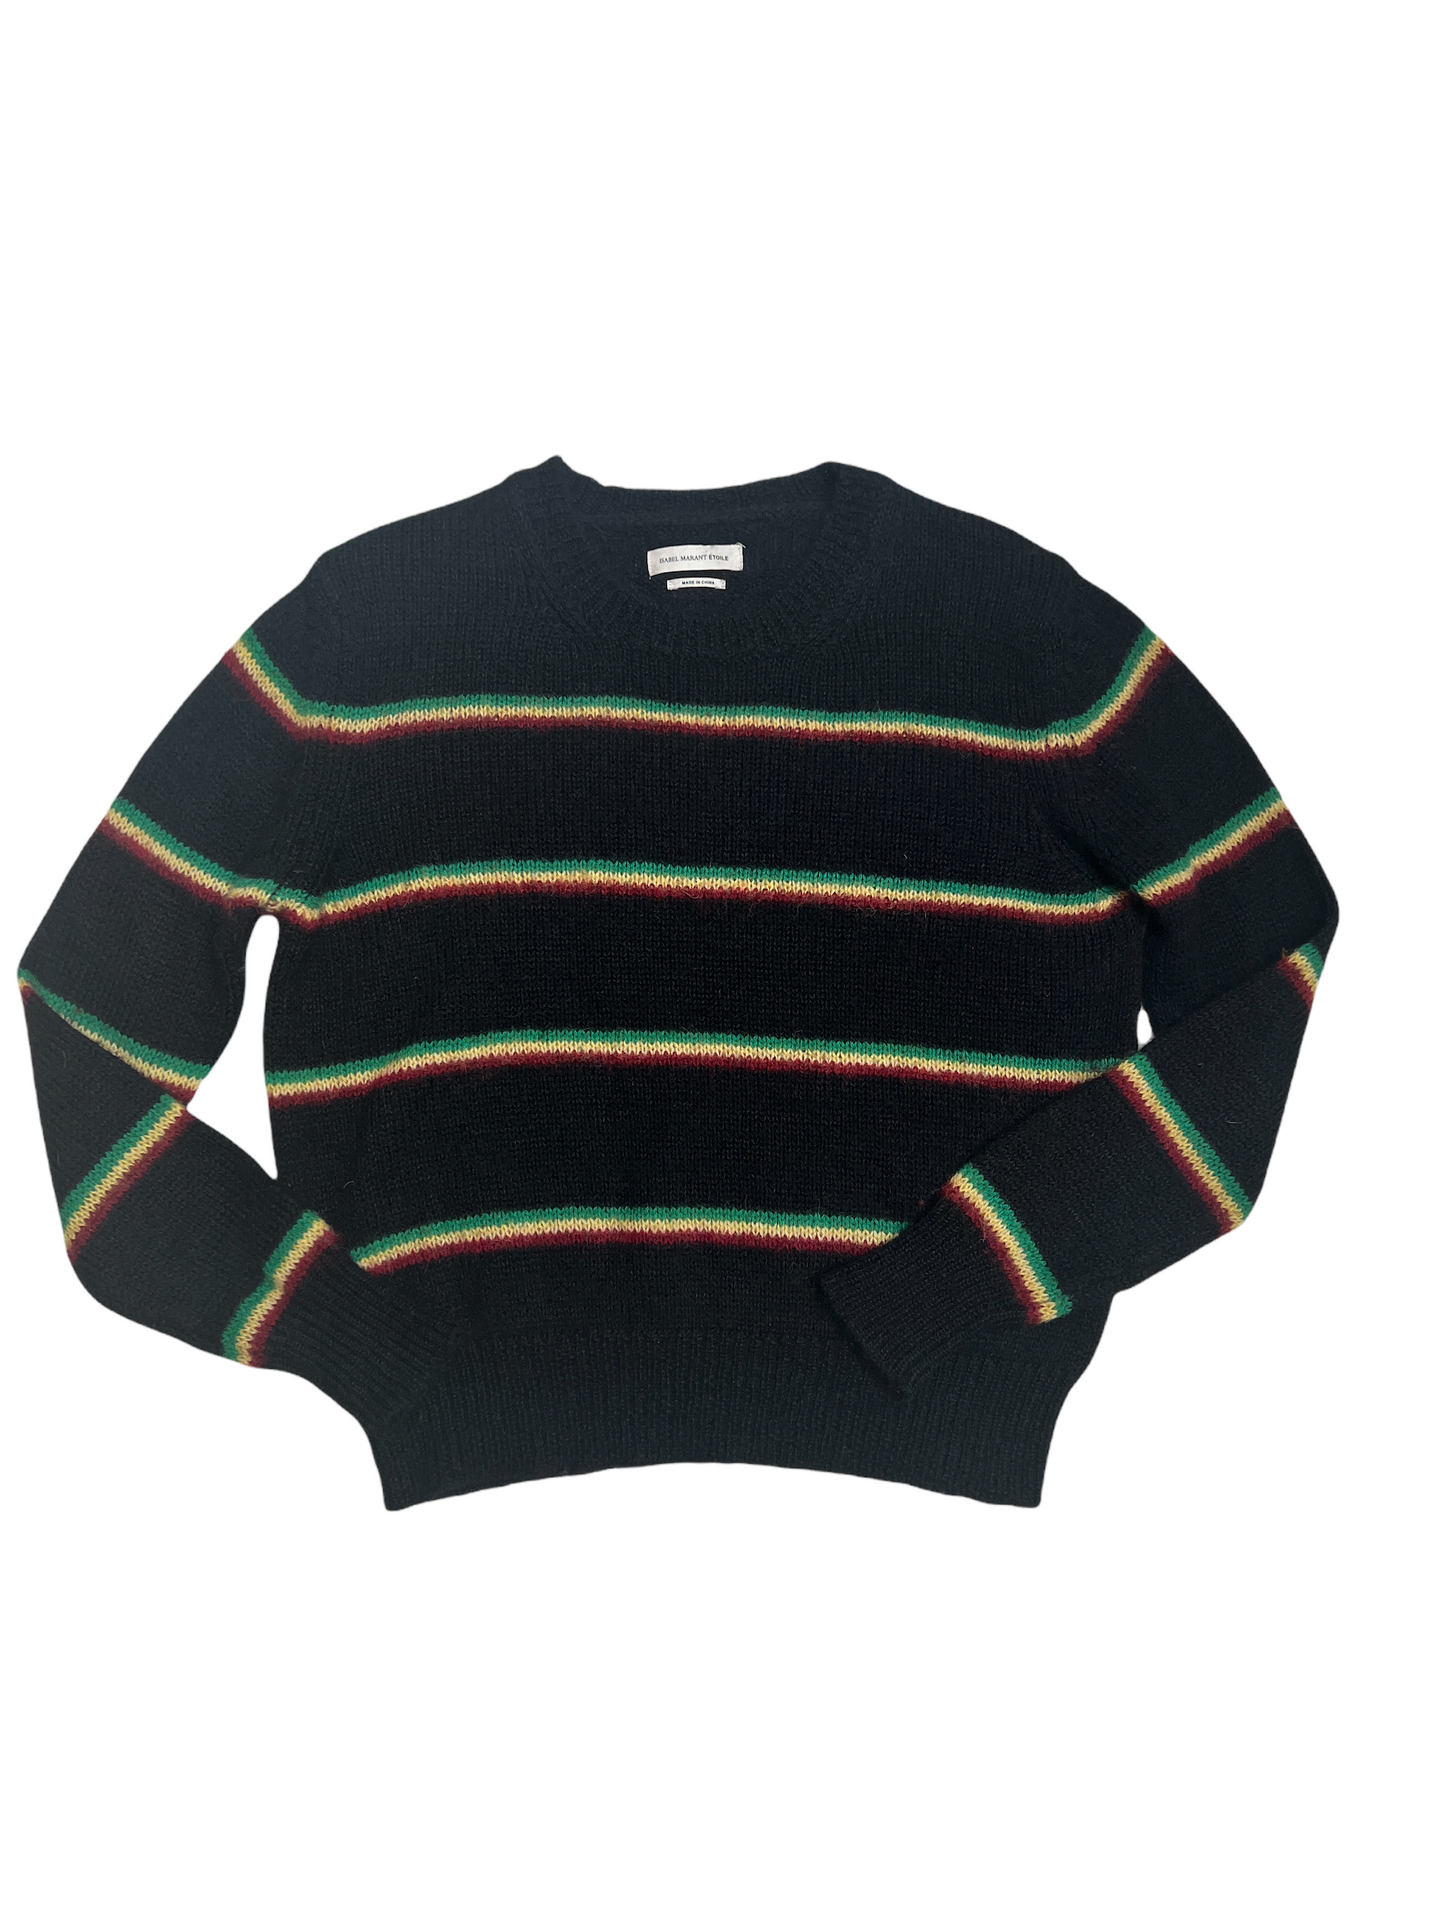 Soft Black Sweater - S